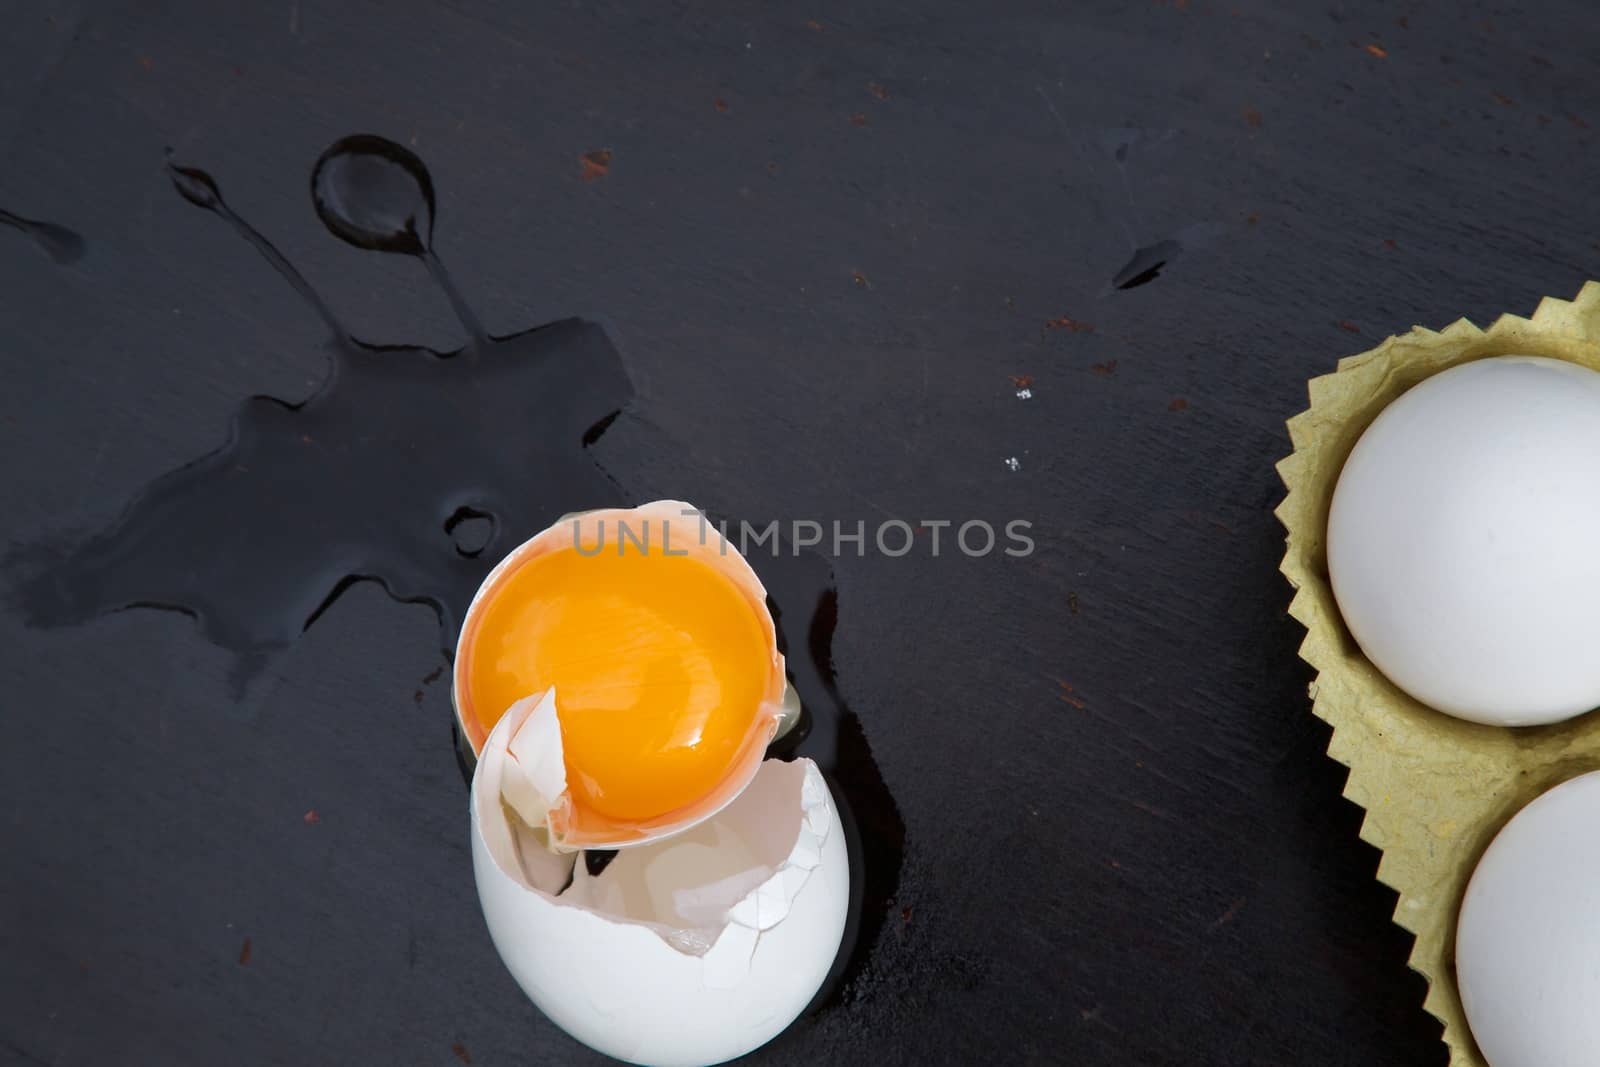 A broken egg on a black wooden surface